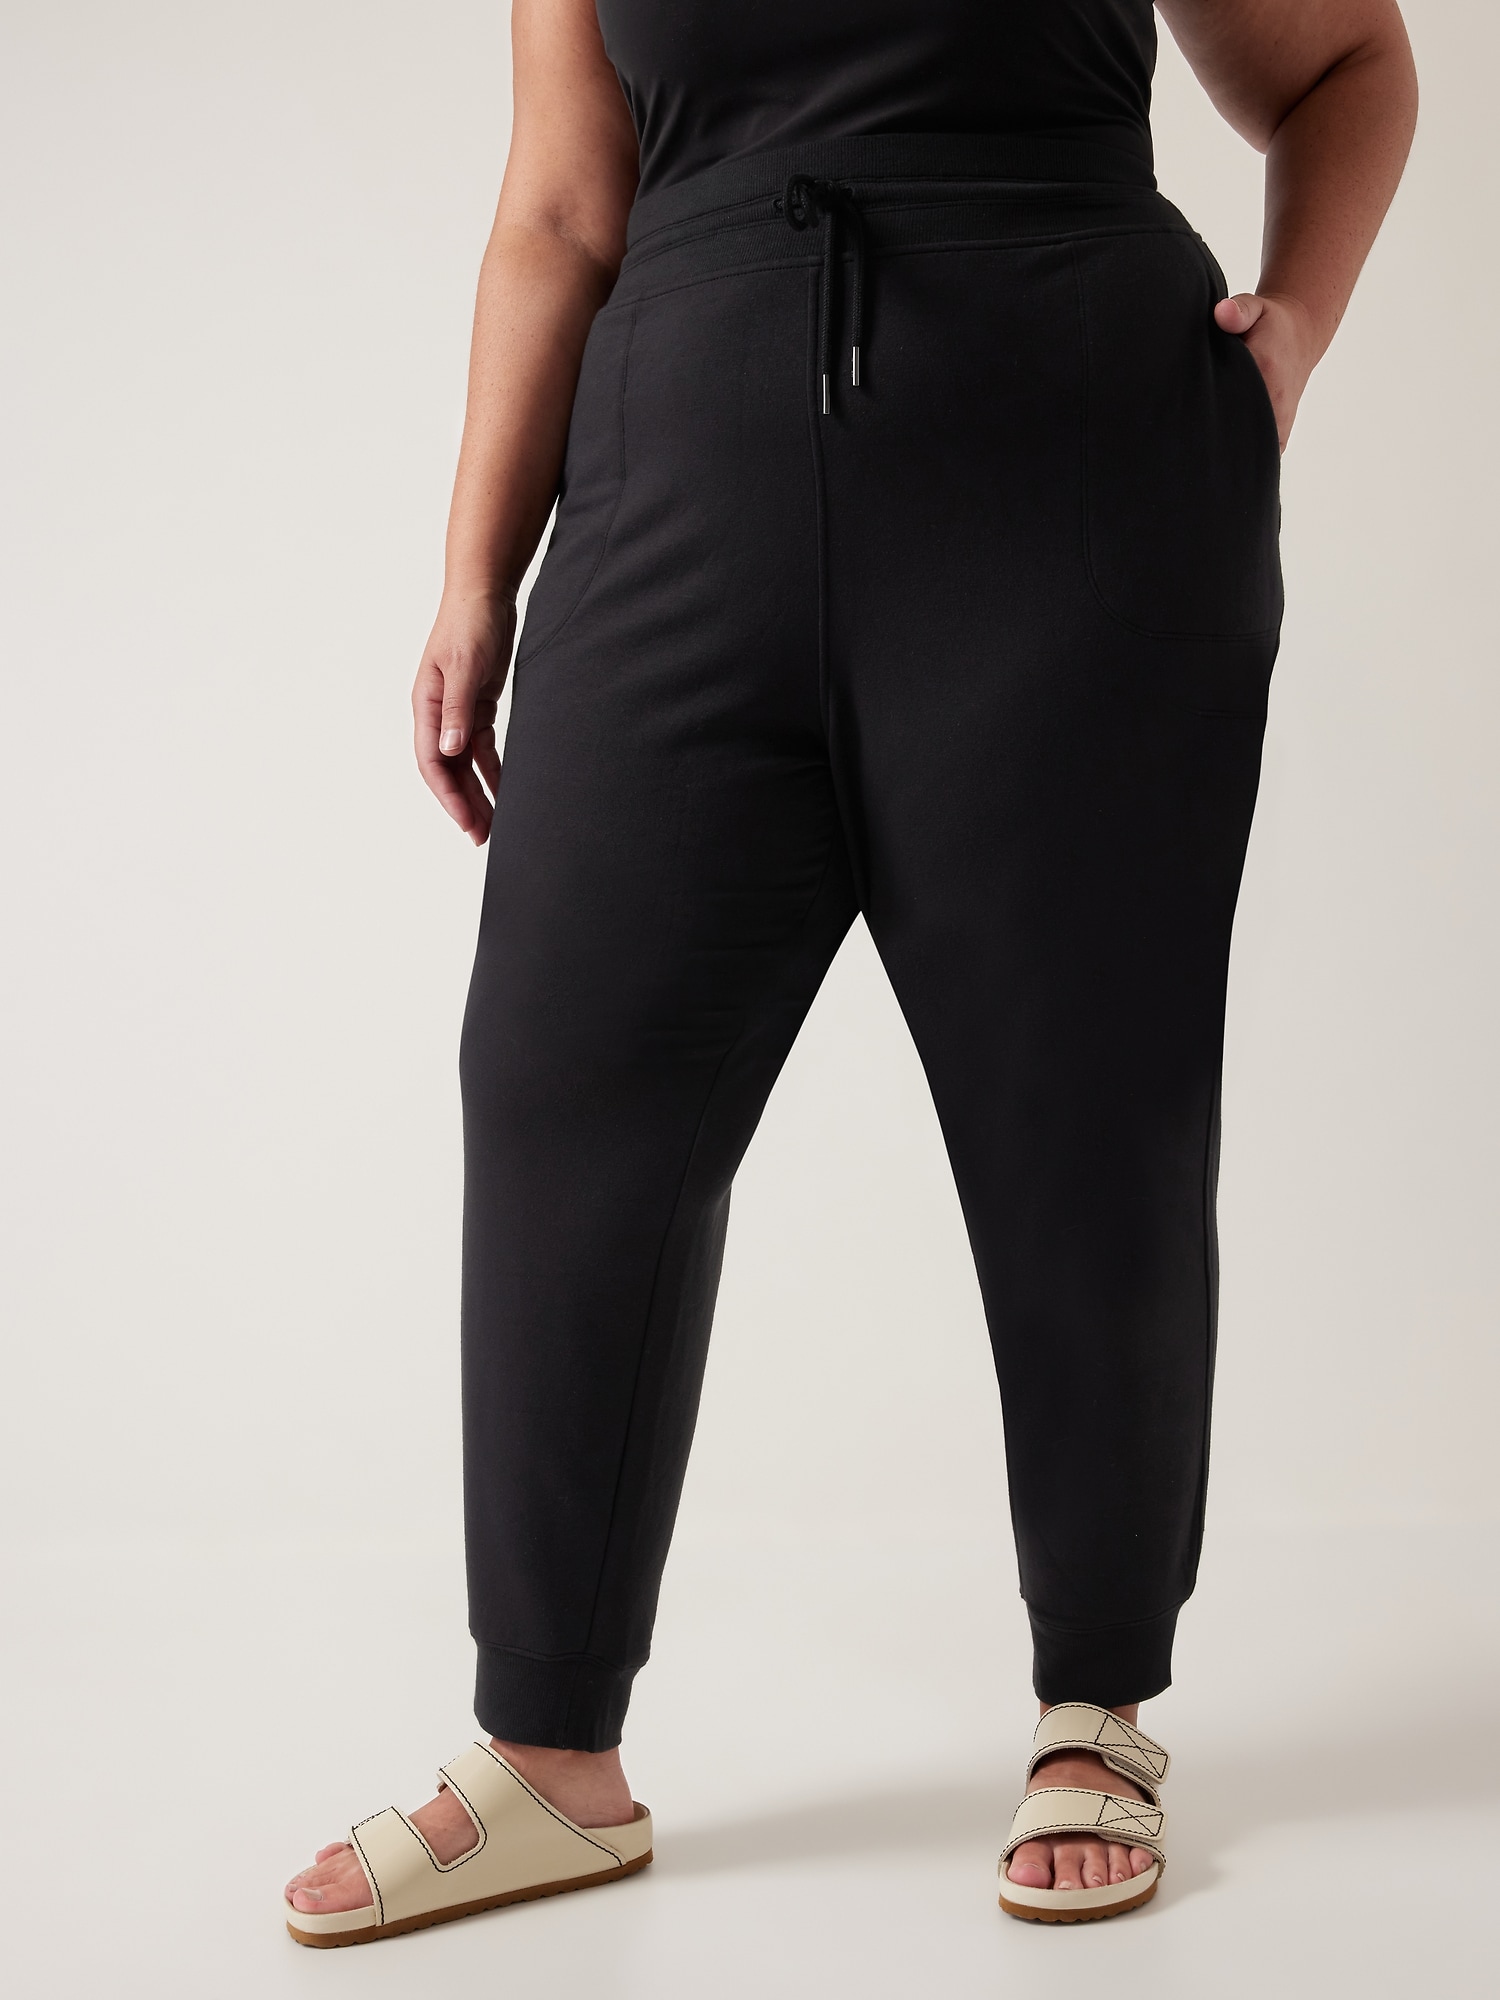 Balance Collection Black Active Pants Size M - 73% off